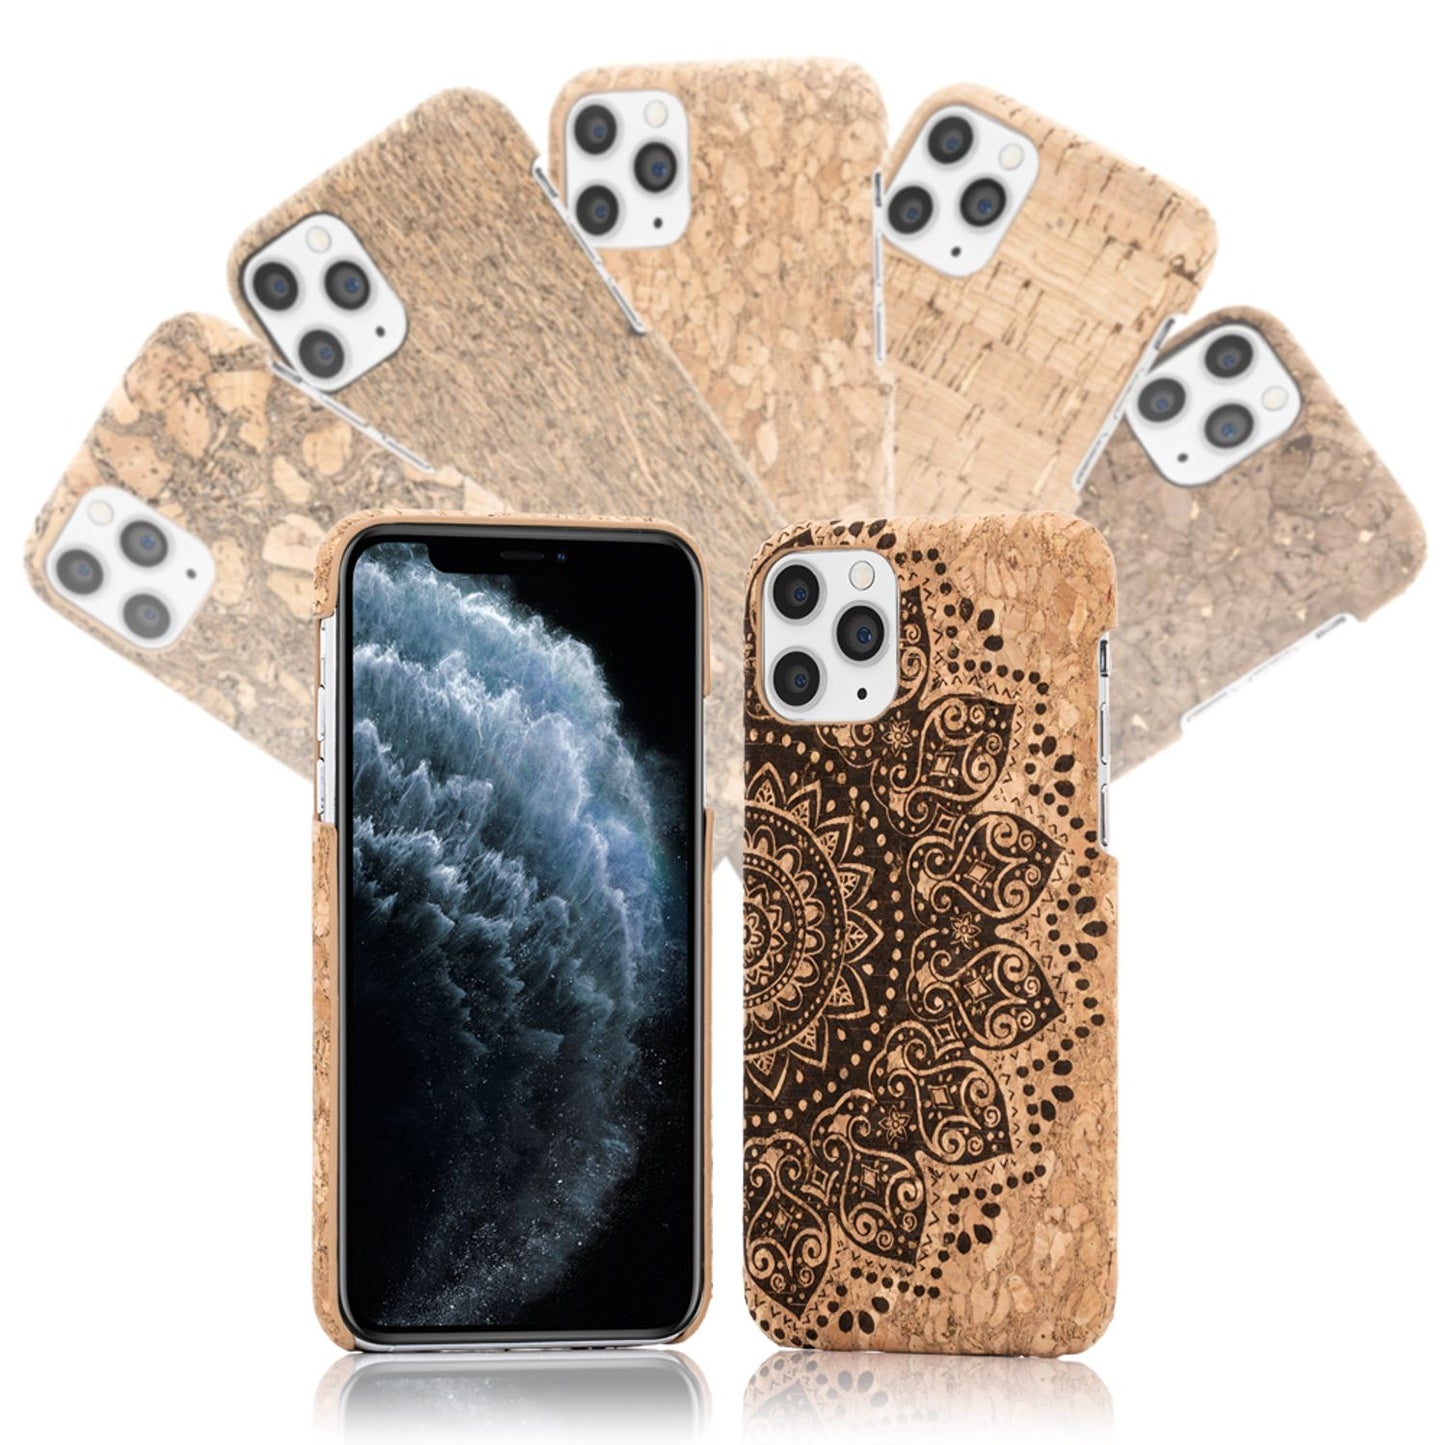 NALIA Kork Handy Hülle für iPhone 11 Pro Max, Natur-Holz Hard Case Design Cover